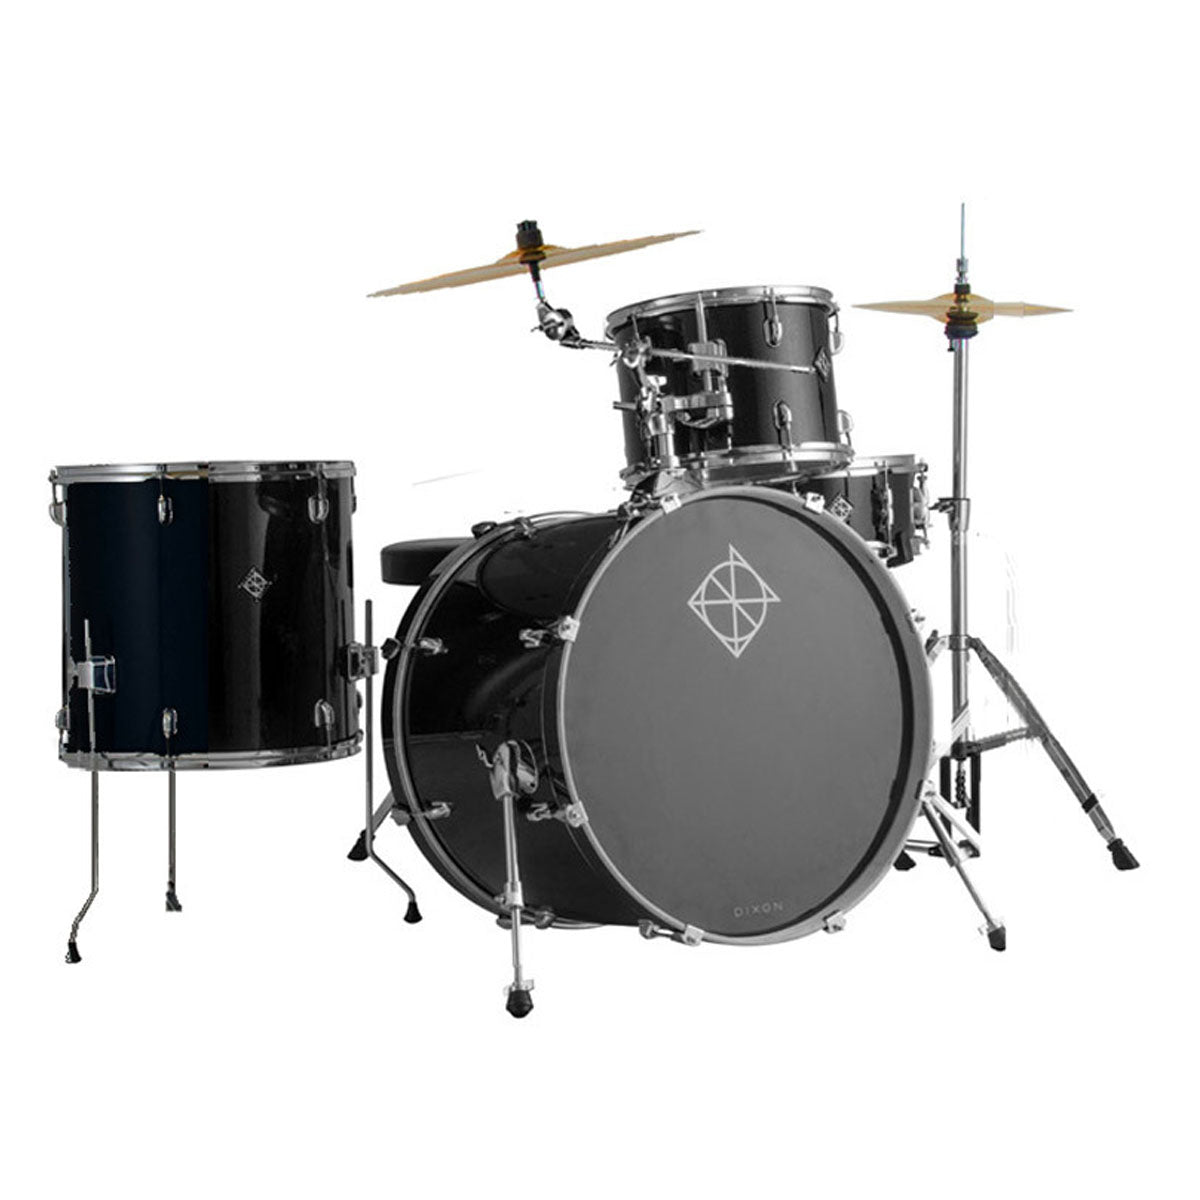 Dixon Spark Series Drum Kit 4-Piece Ocean Blue Sparkle w/ Cymbals & Hardware & Throne - PODSP418COBS